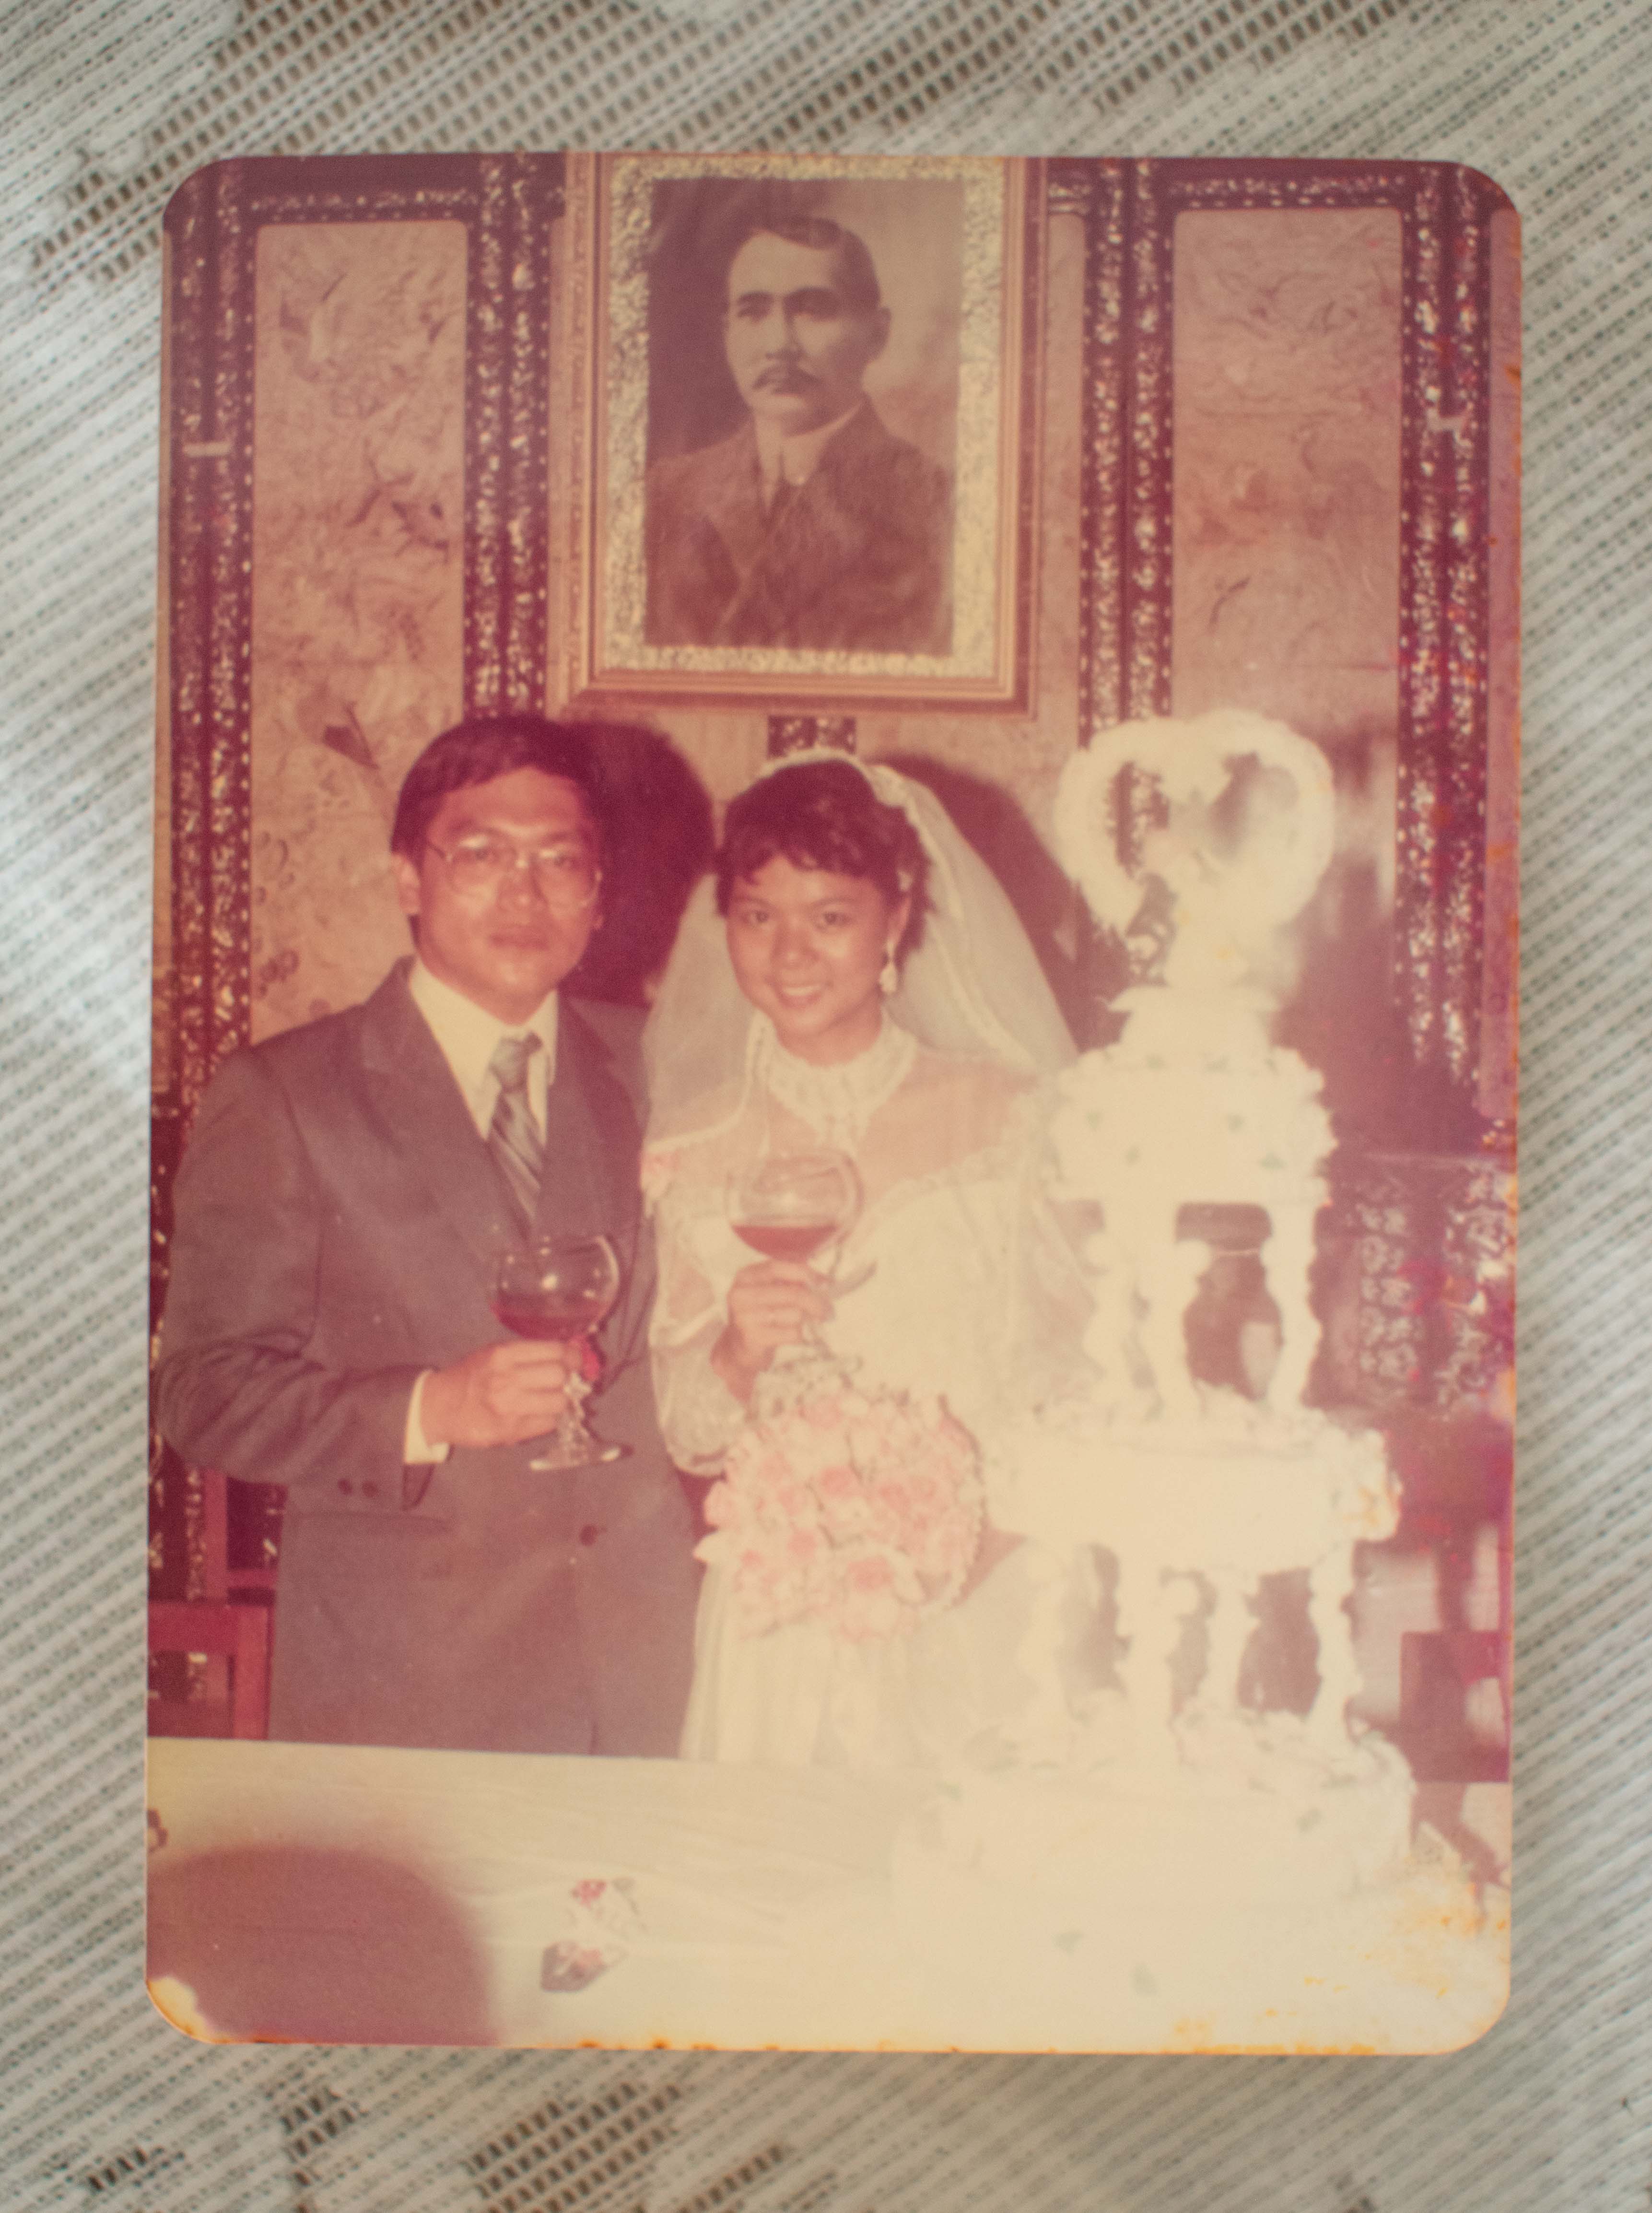 10. Edgar Acón Li And Luisa Hernández Lo’s Wedding, Date Unknown